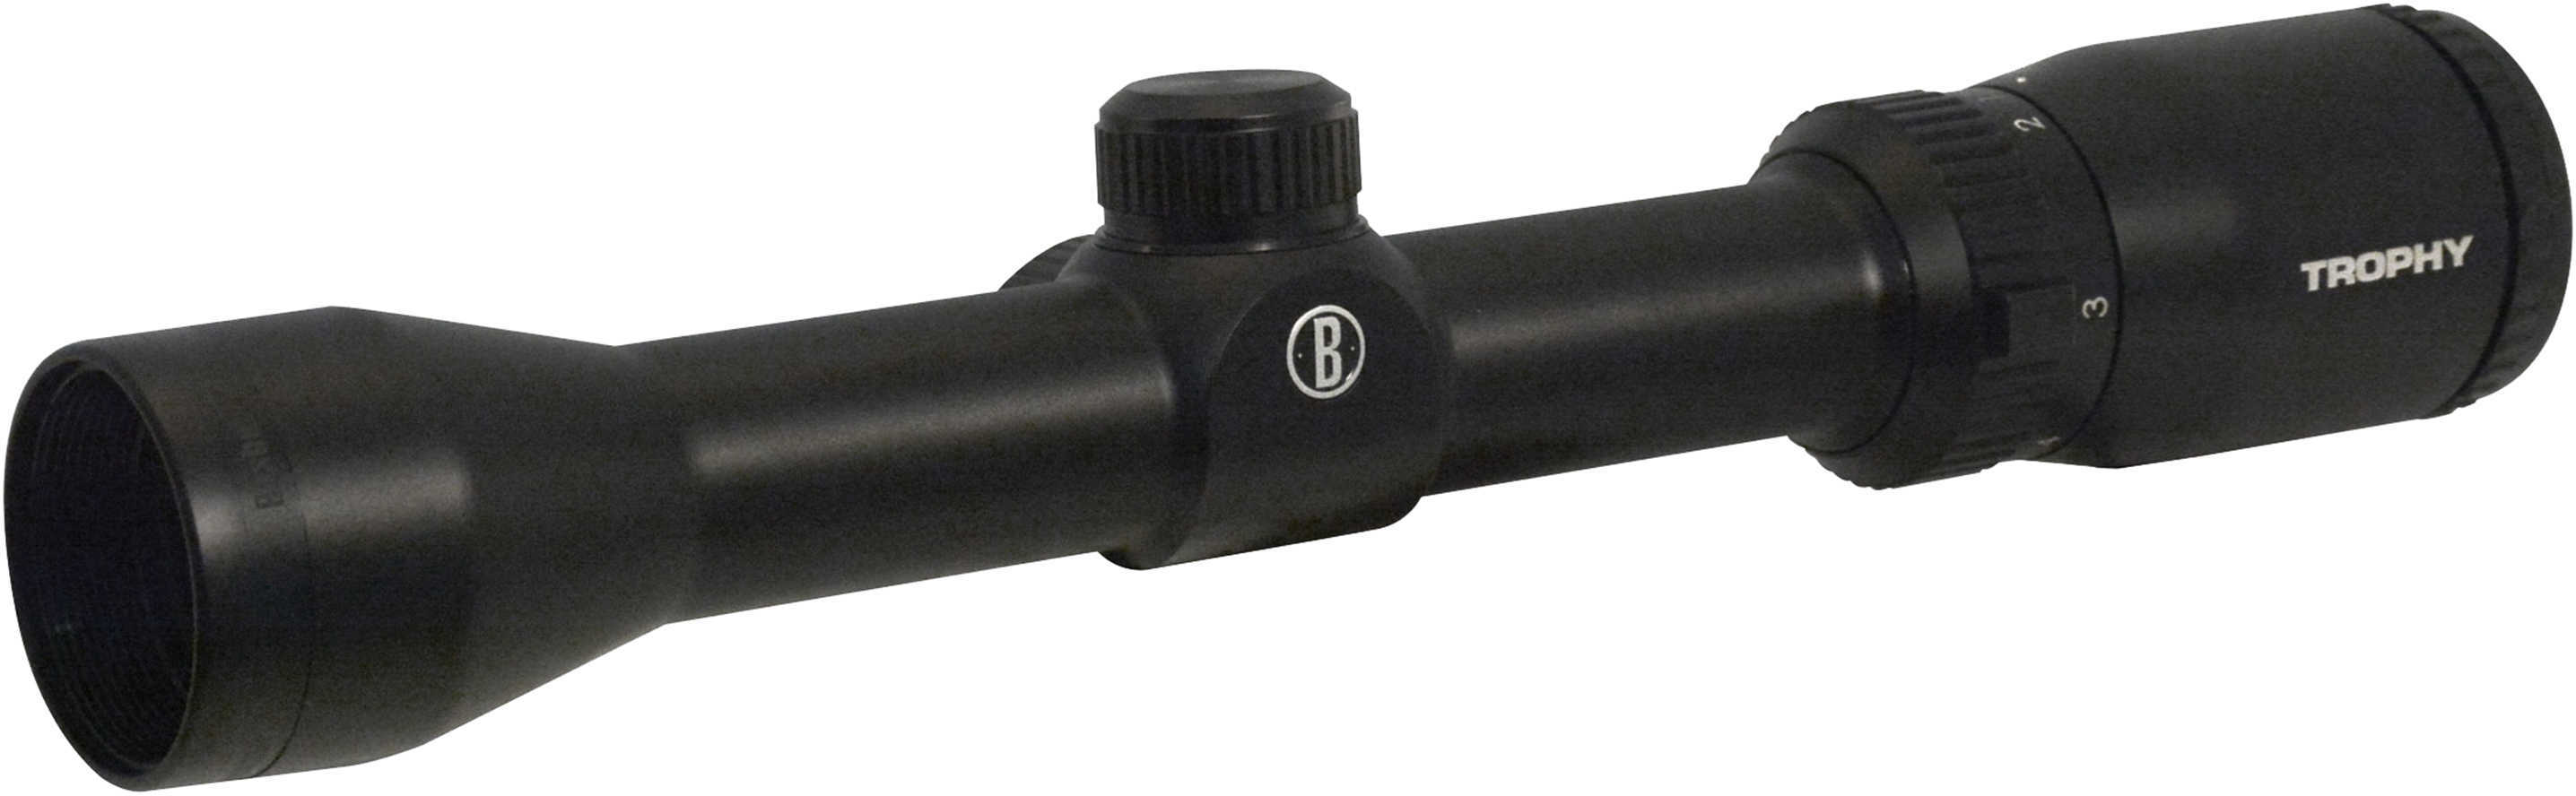 Bushnell Trophy Riflescope 1.75-4X32mm, Circle-X Reticle, 1" Main Tune, Matte Black Md: 751432